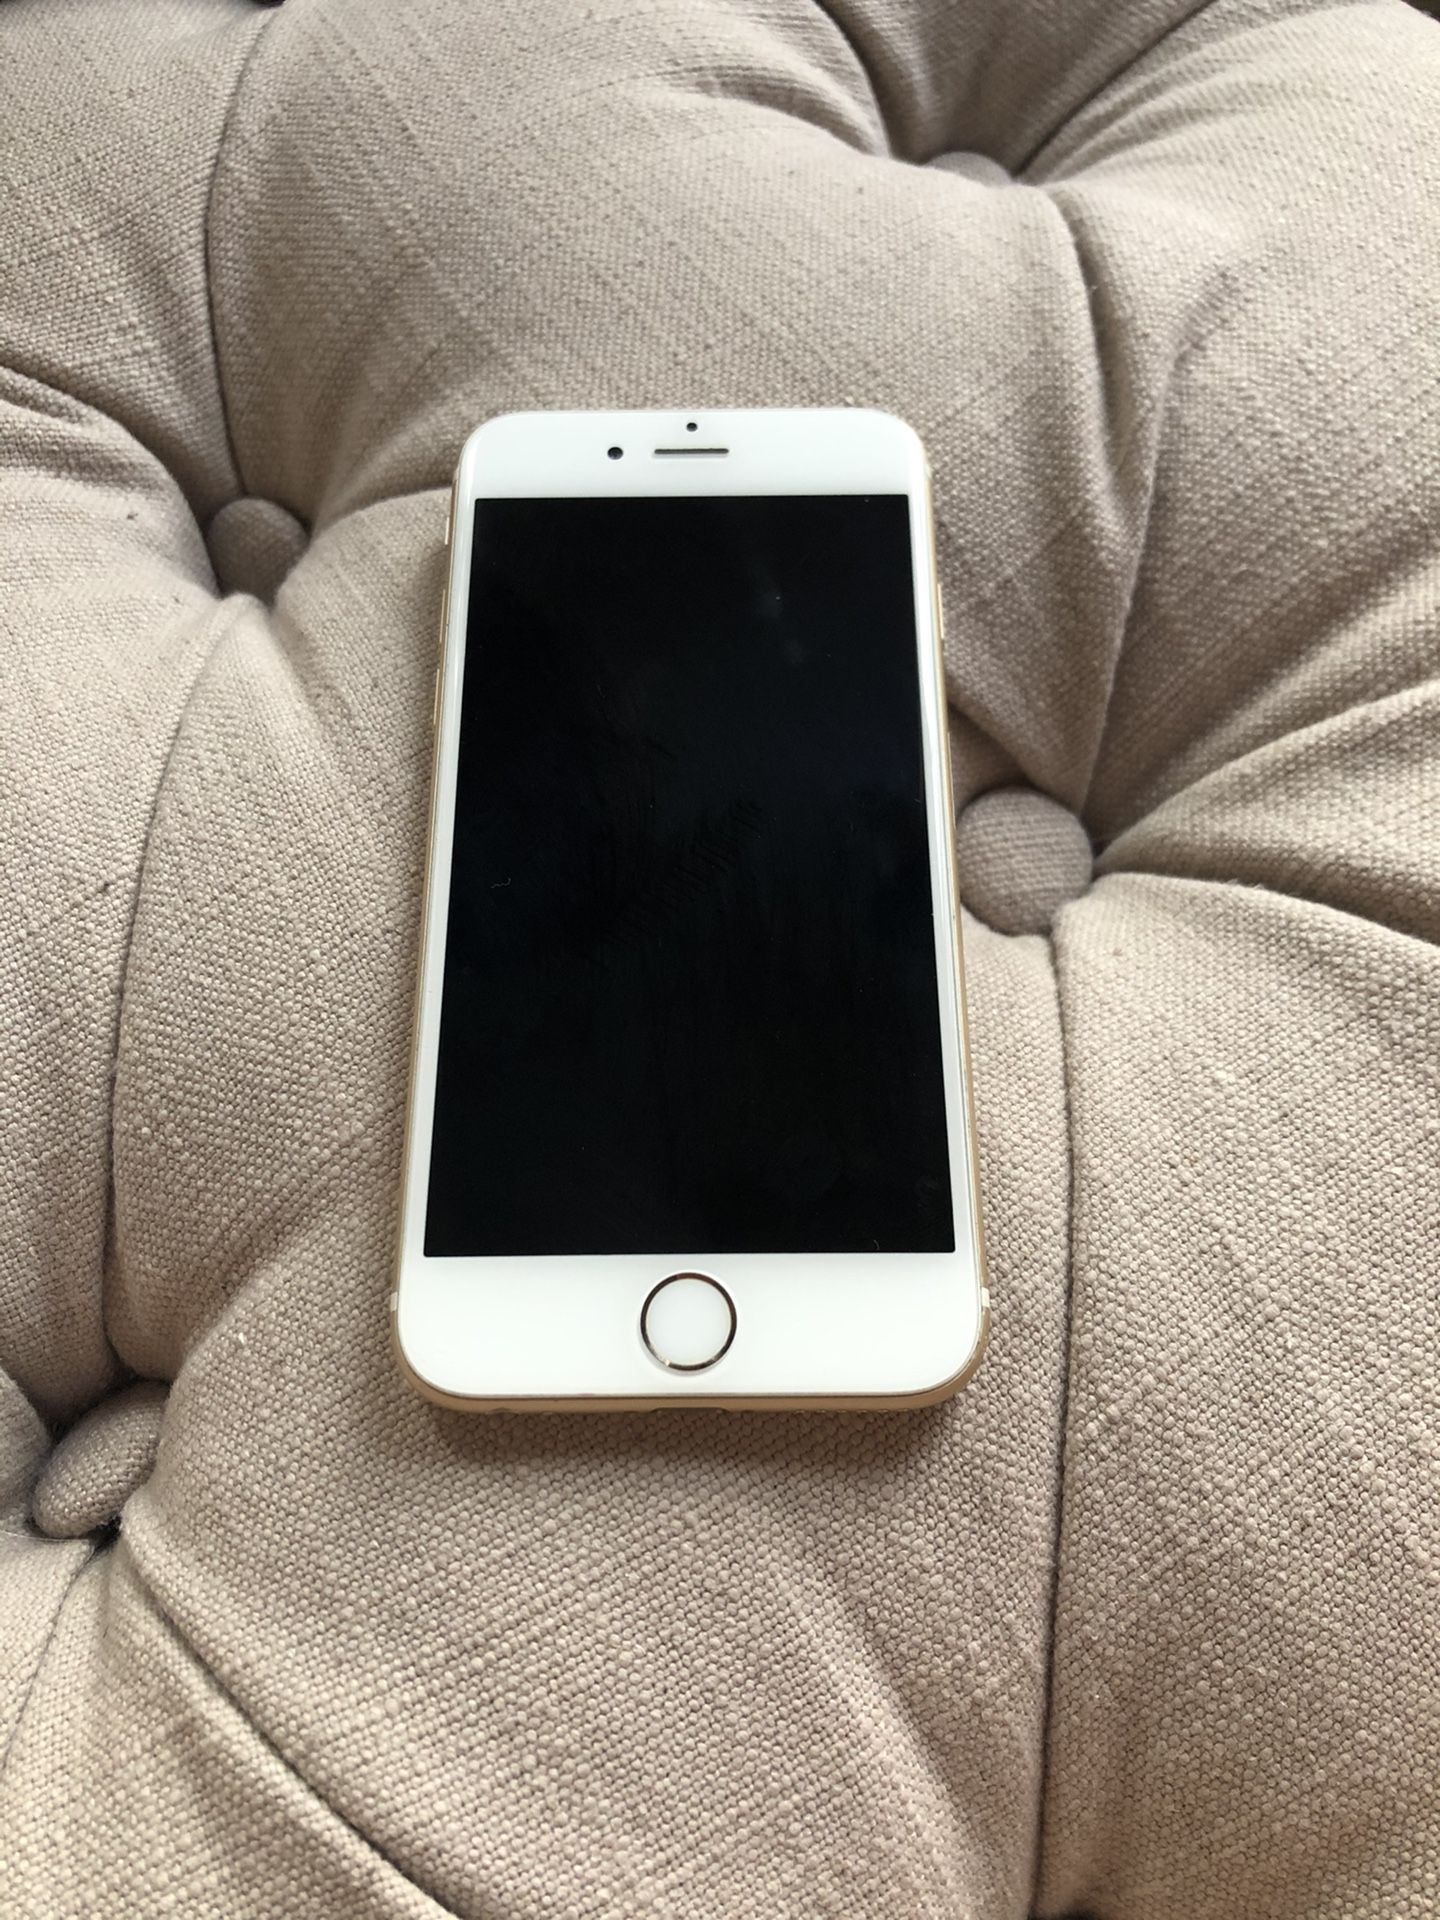 iPhone 6S. Gold, 16GB, unlocked.